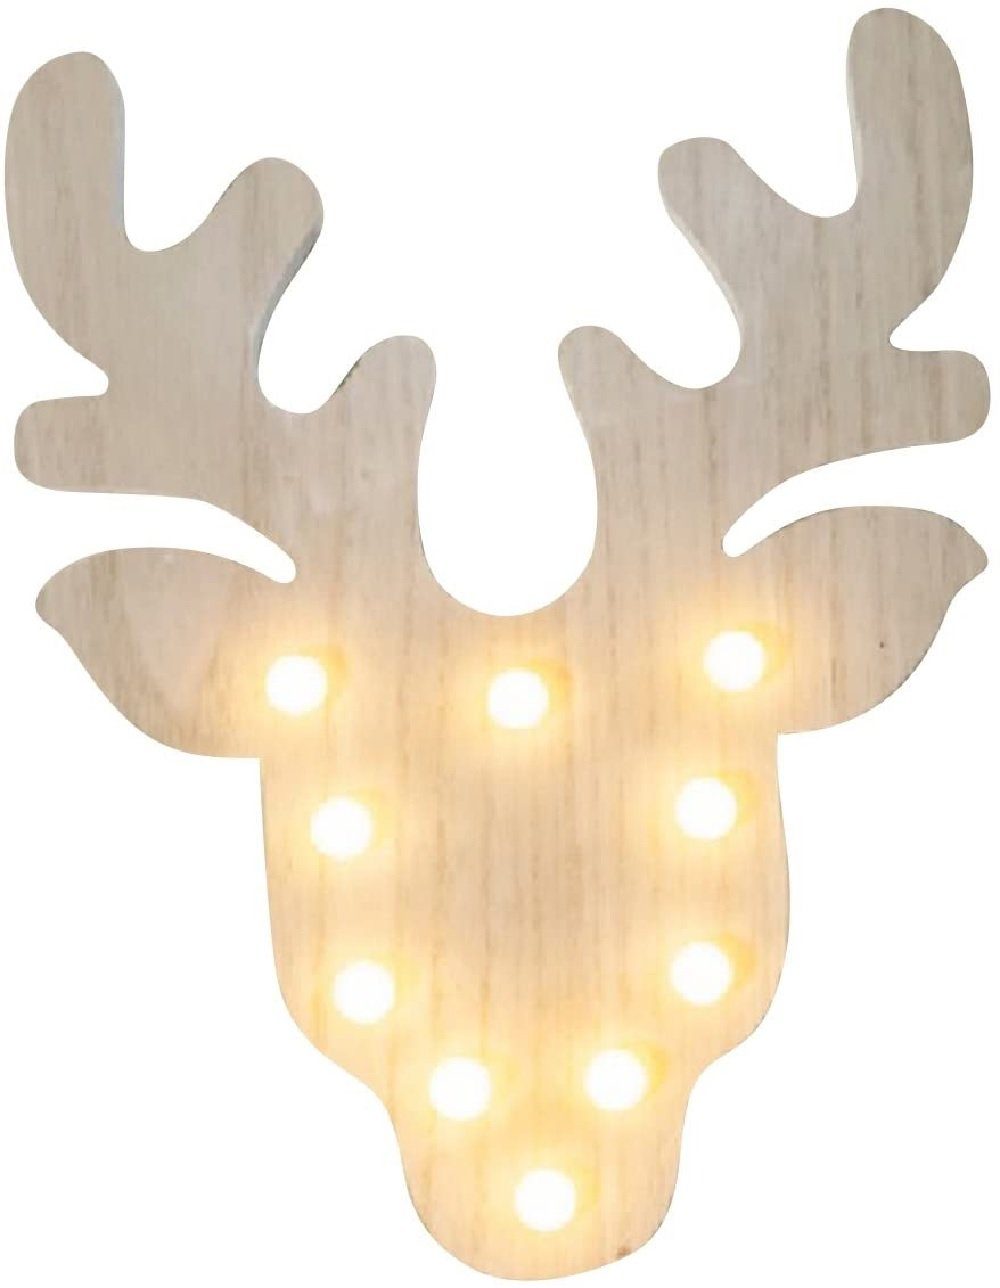 LED Wandbild "Hirsch", Wand-Deko, Weihnachts- und Winterbeleuchtung, Holz Dekoration